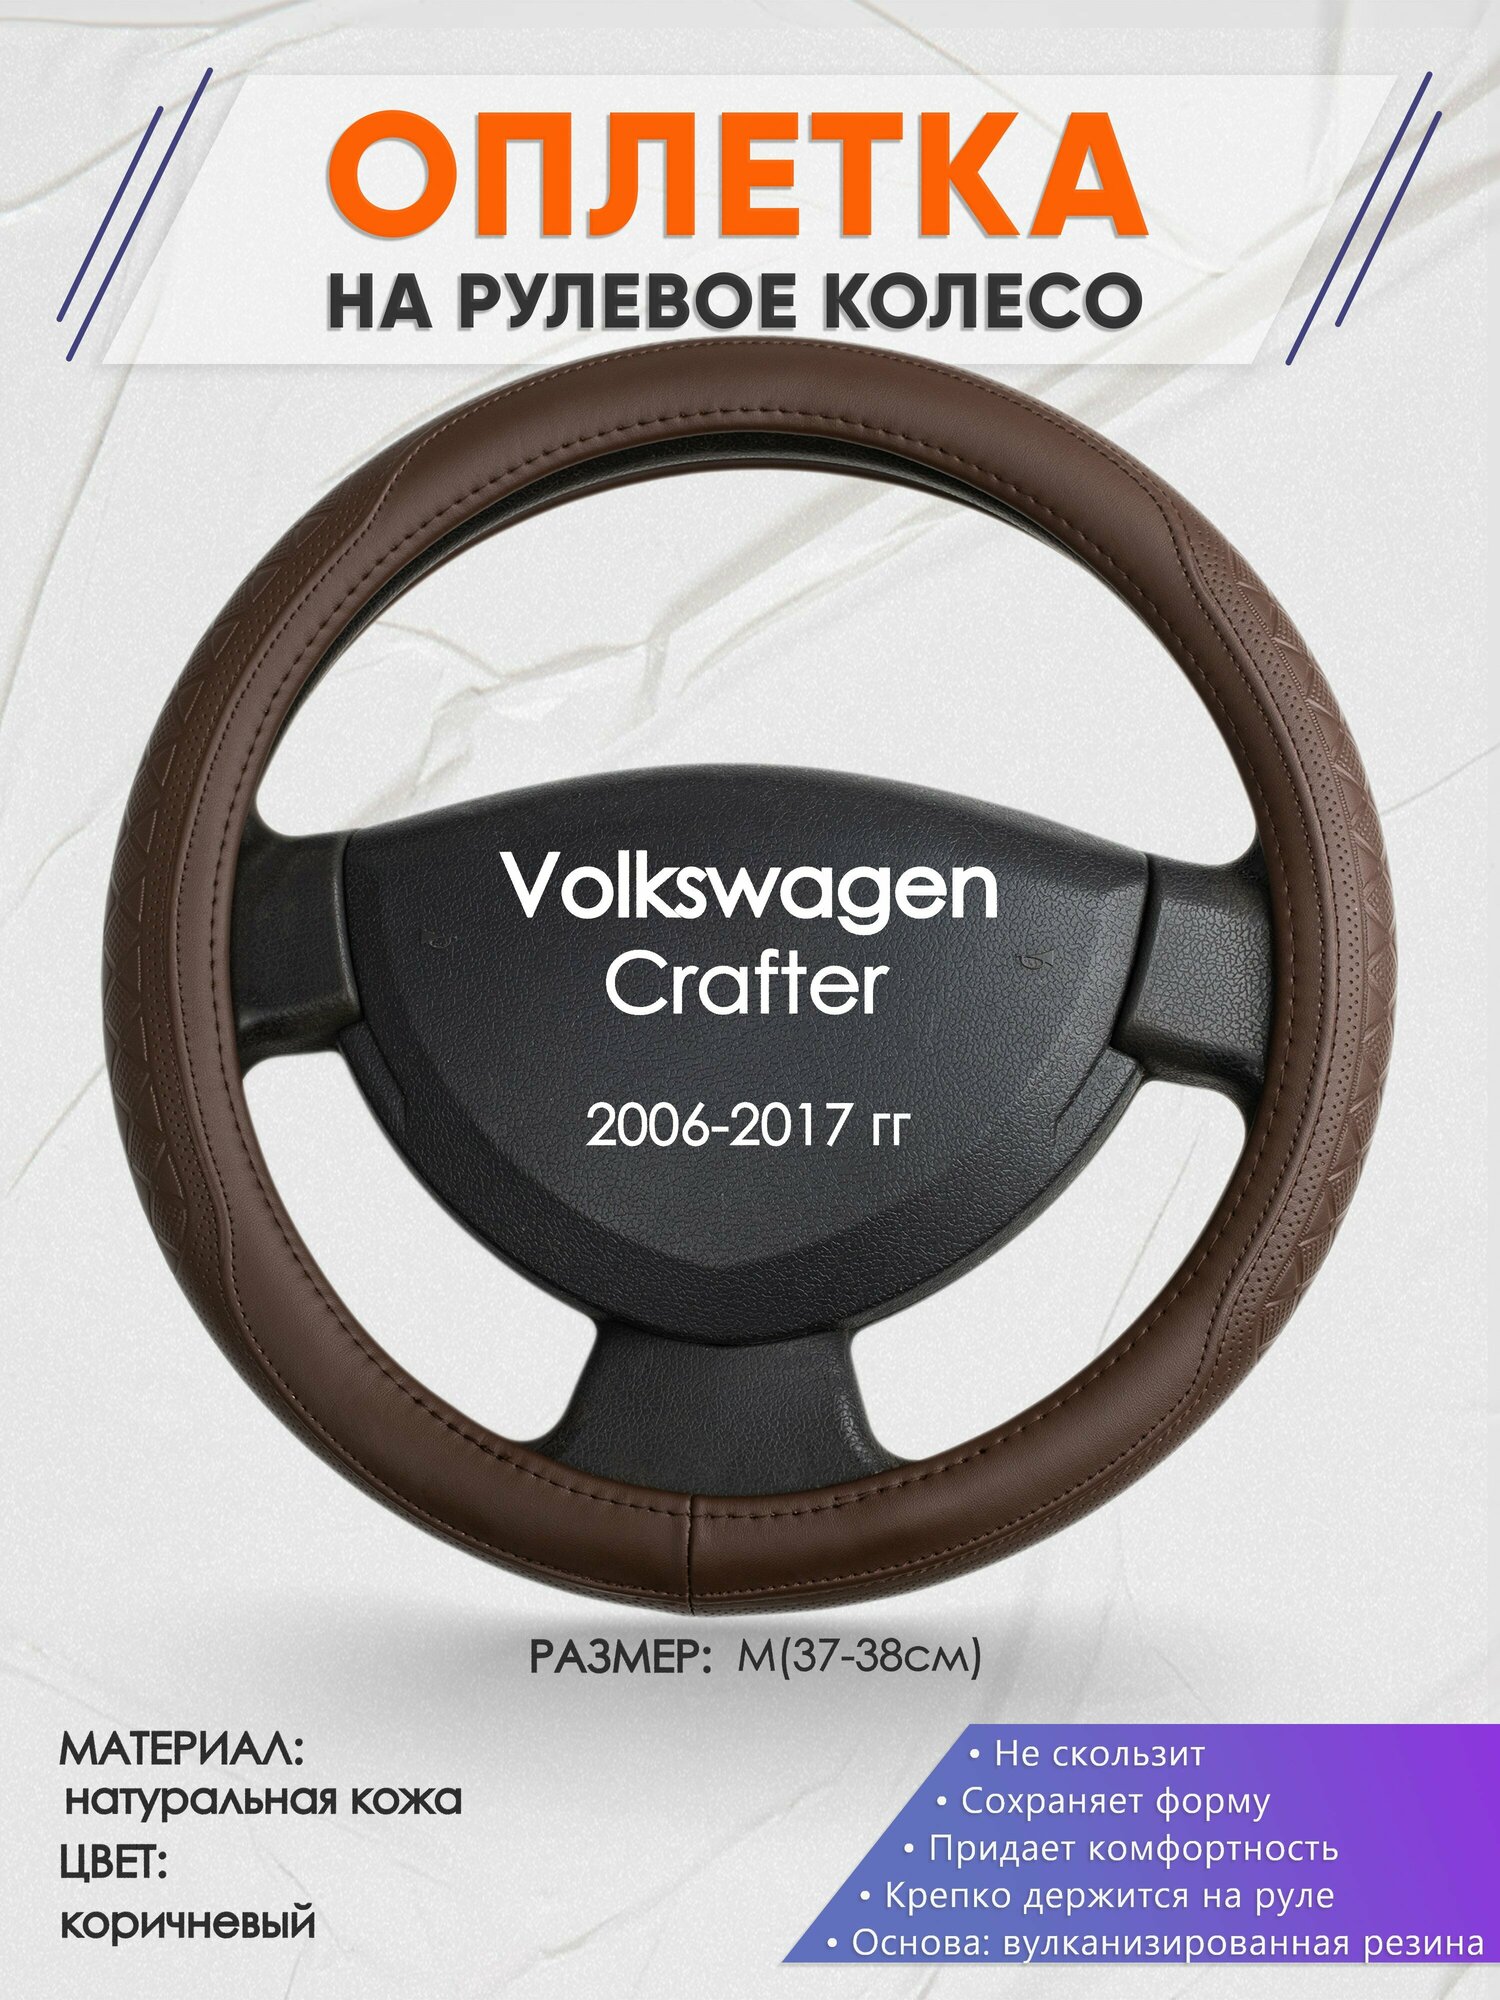 Оплетка на руль для Volkswagen Crafter (Фольксваген Крафтер) 2006-2017, M(37-38см), Натуральная кожа 88